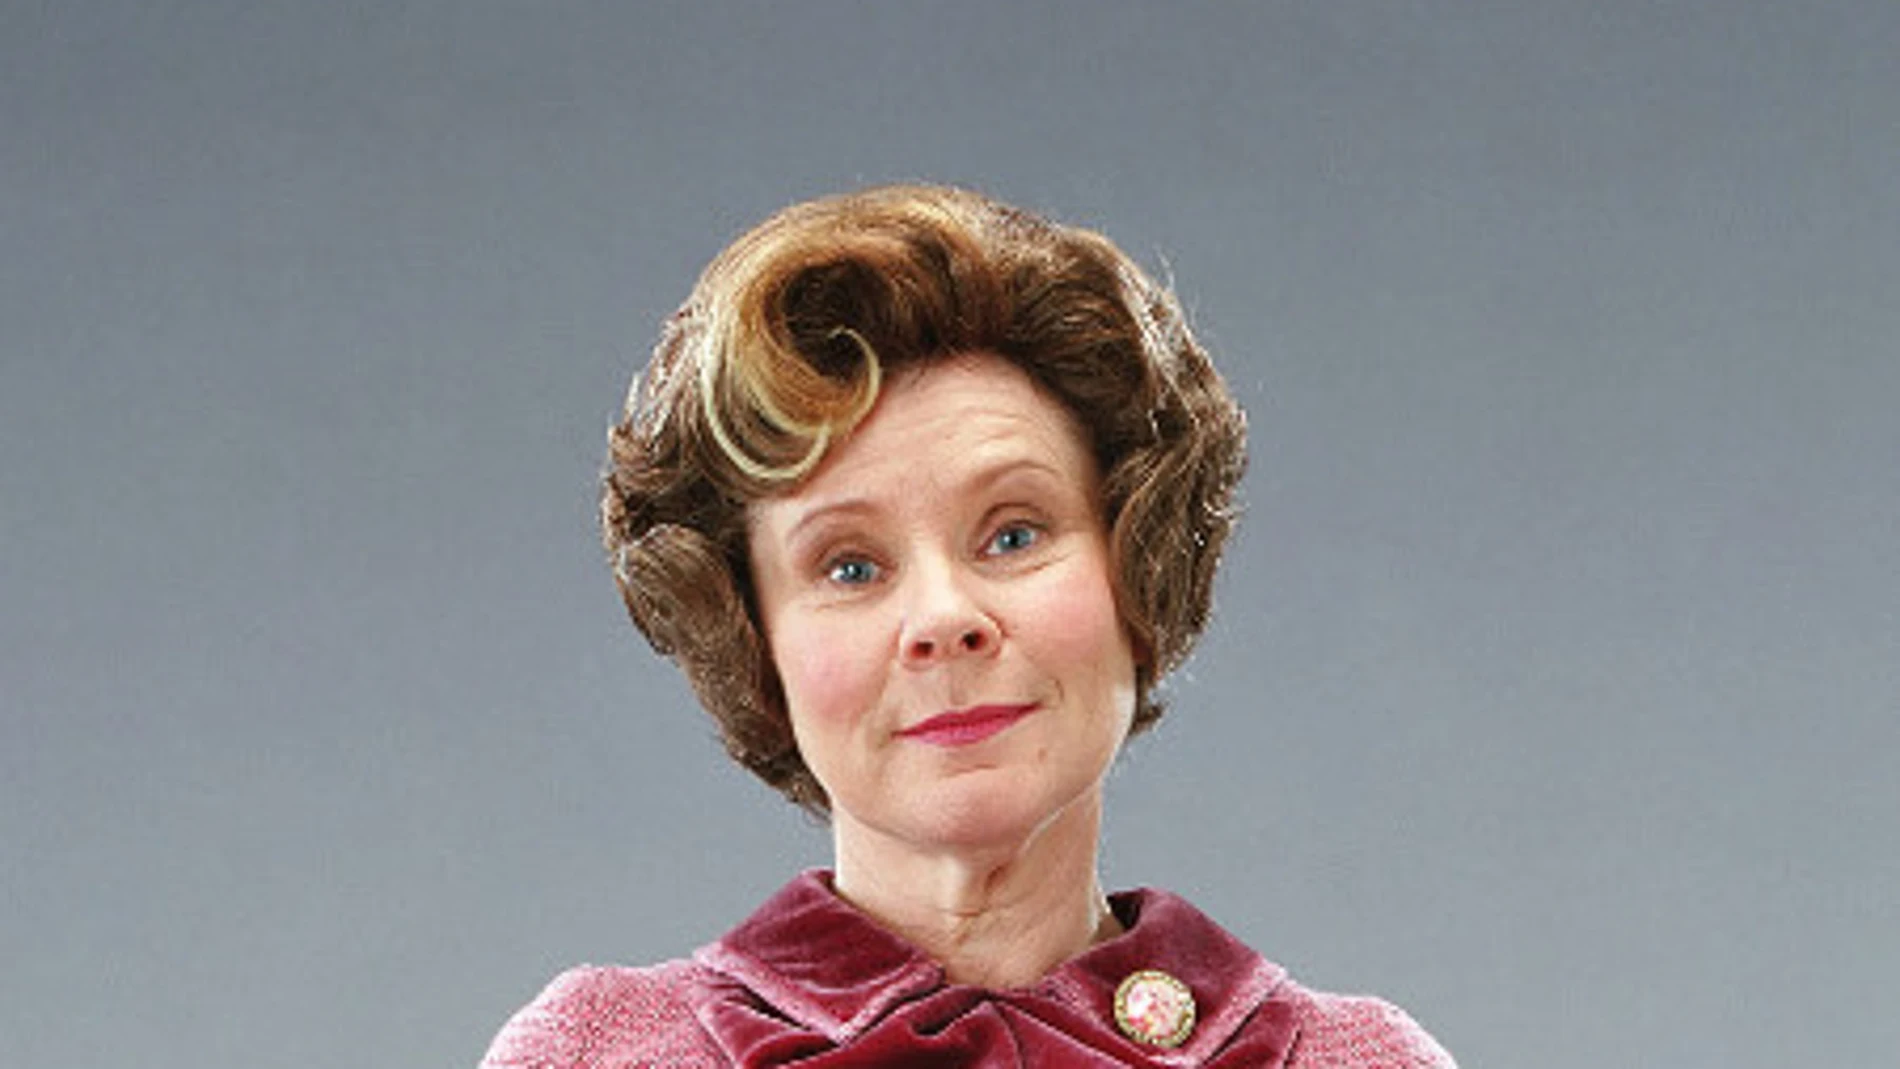 Imelda Staunton interpretó a Dolores Umbridge en "Harry Potter"